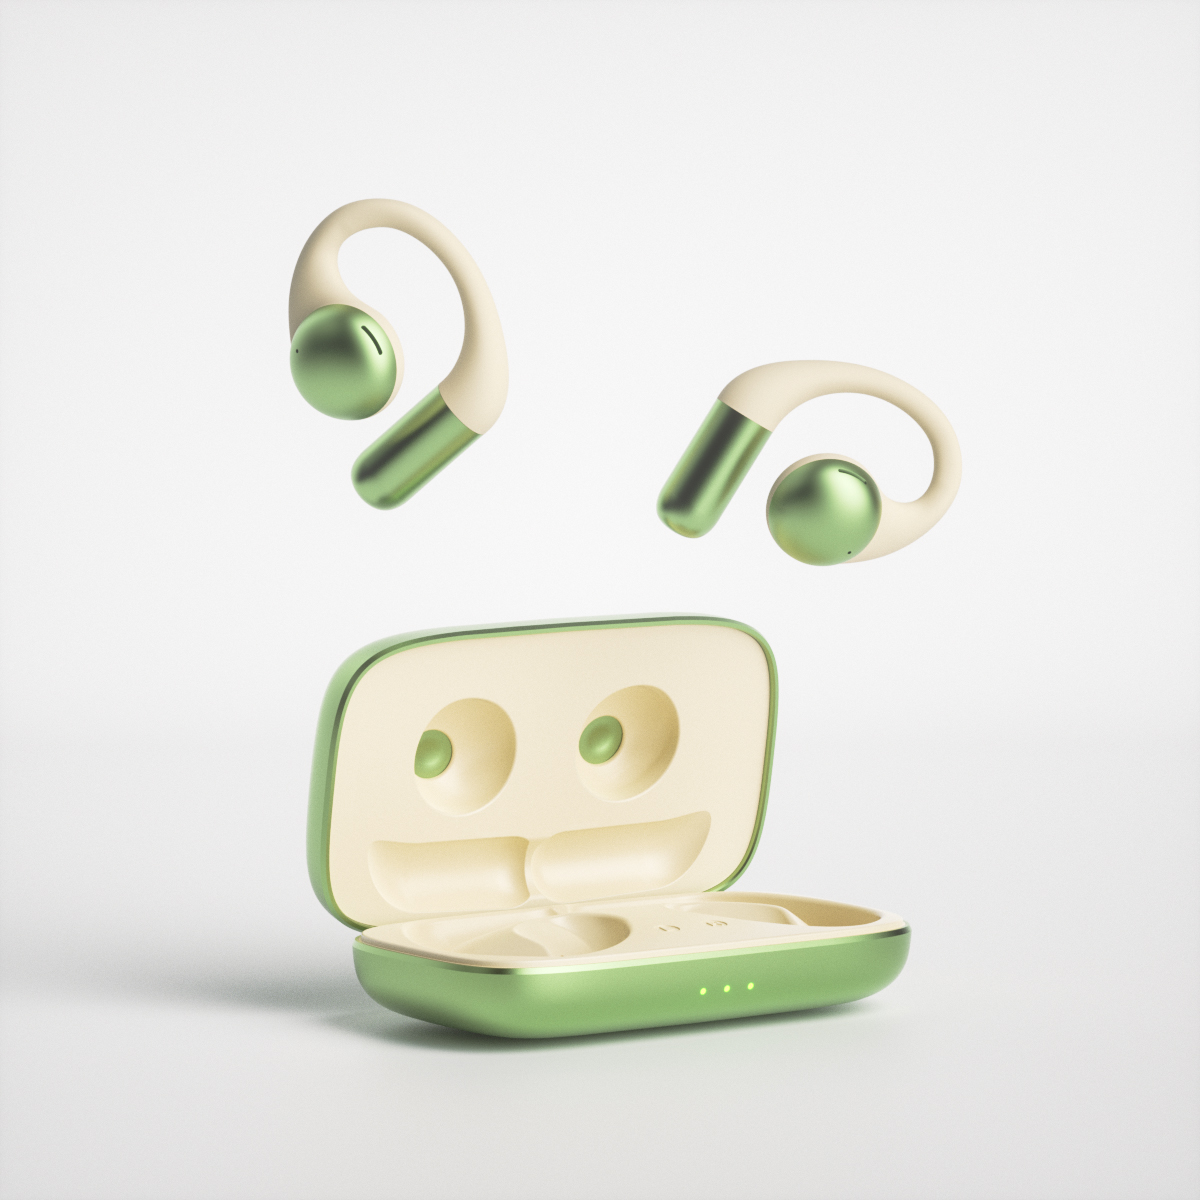 Bestseller de fábrica OWS Auriculares inalámbricos Bluetooth con tecnología impermeable de oído abierto con cancelación de ruido